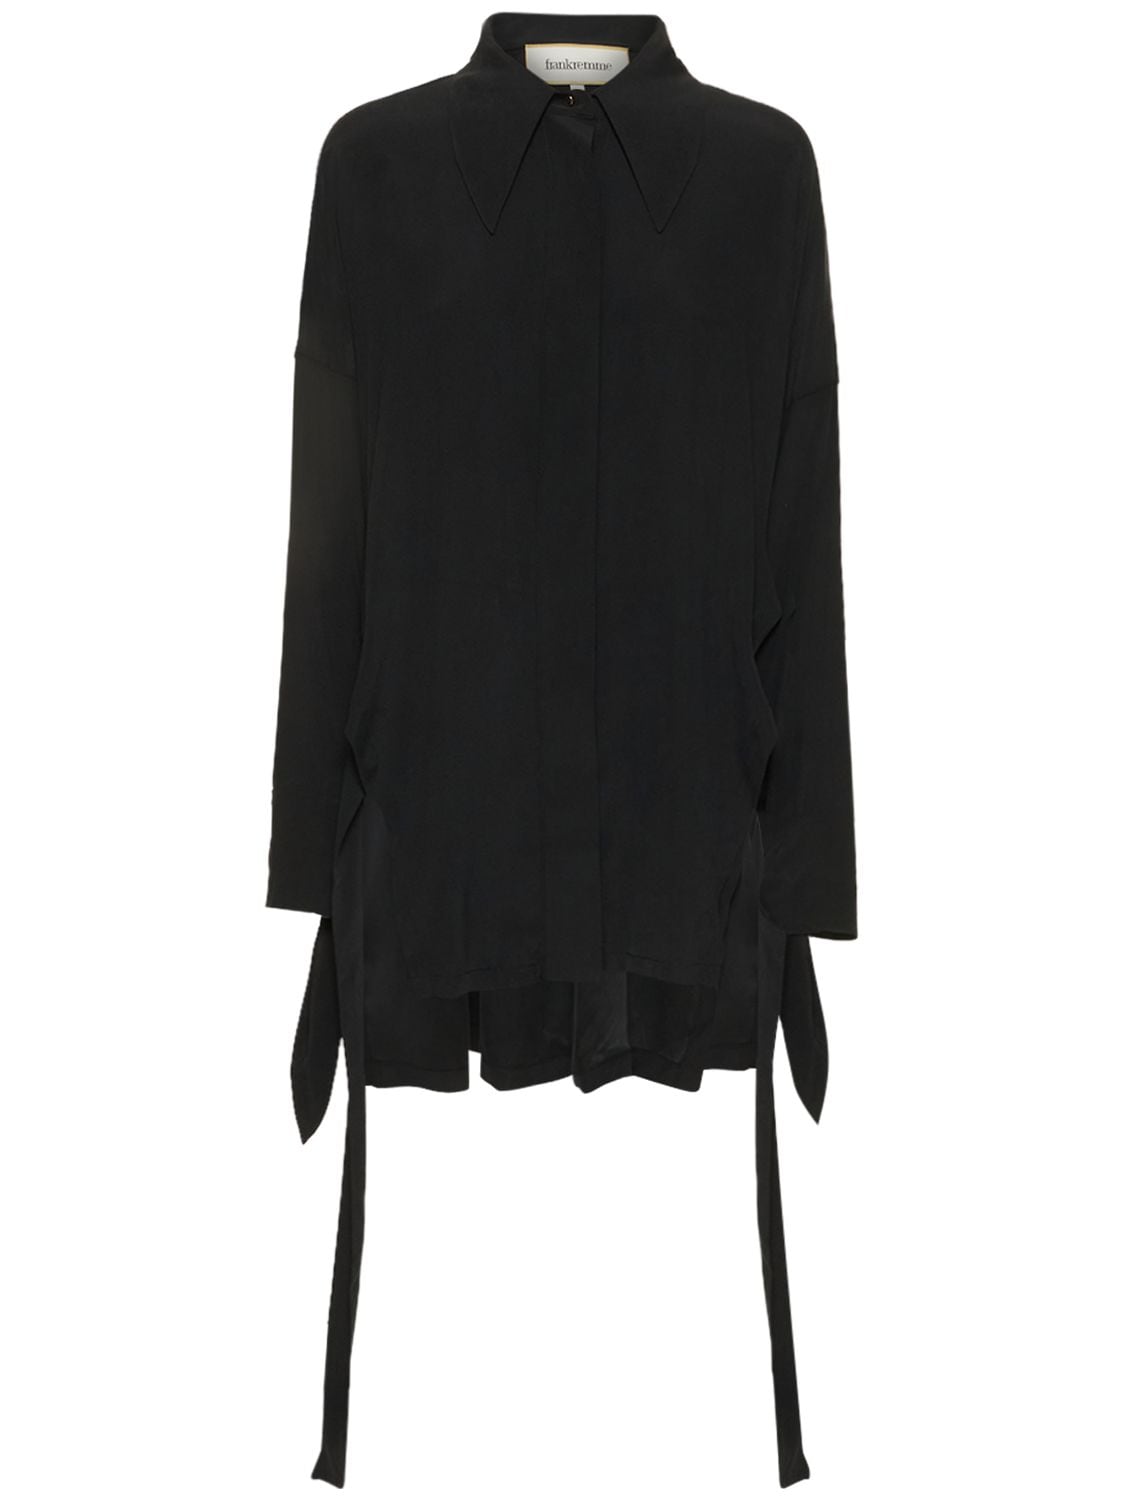 Frankremme Ansolet Oversized Crepe Silk Shirt In Black